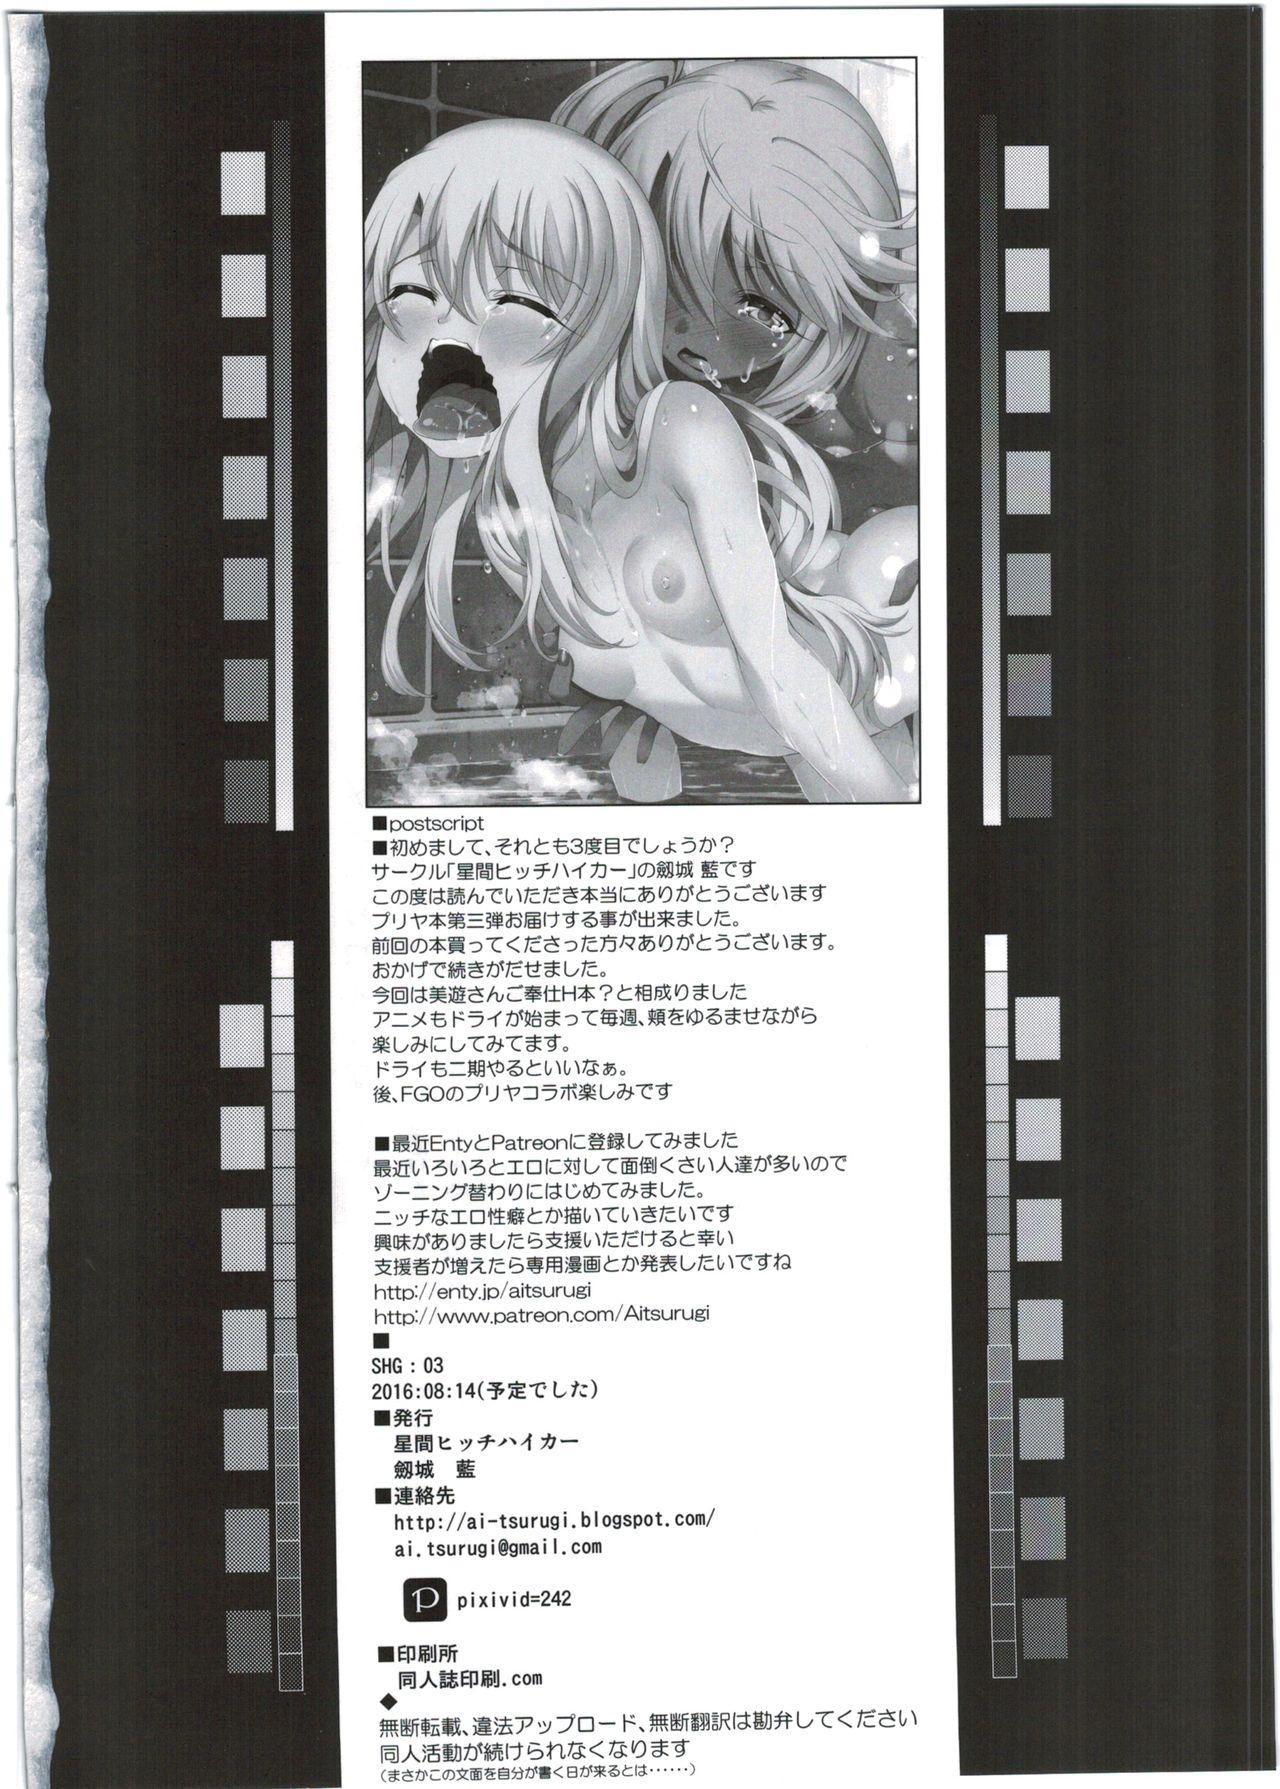 Rub SHG:03 - Fate kaleid liner prisma illya Puba - Page 26